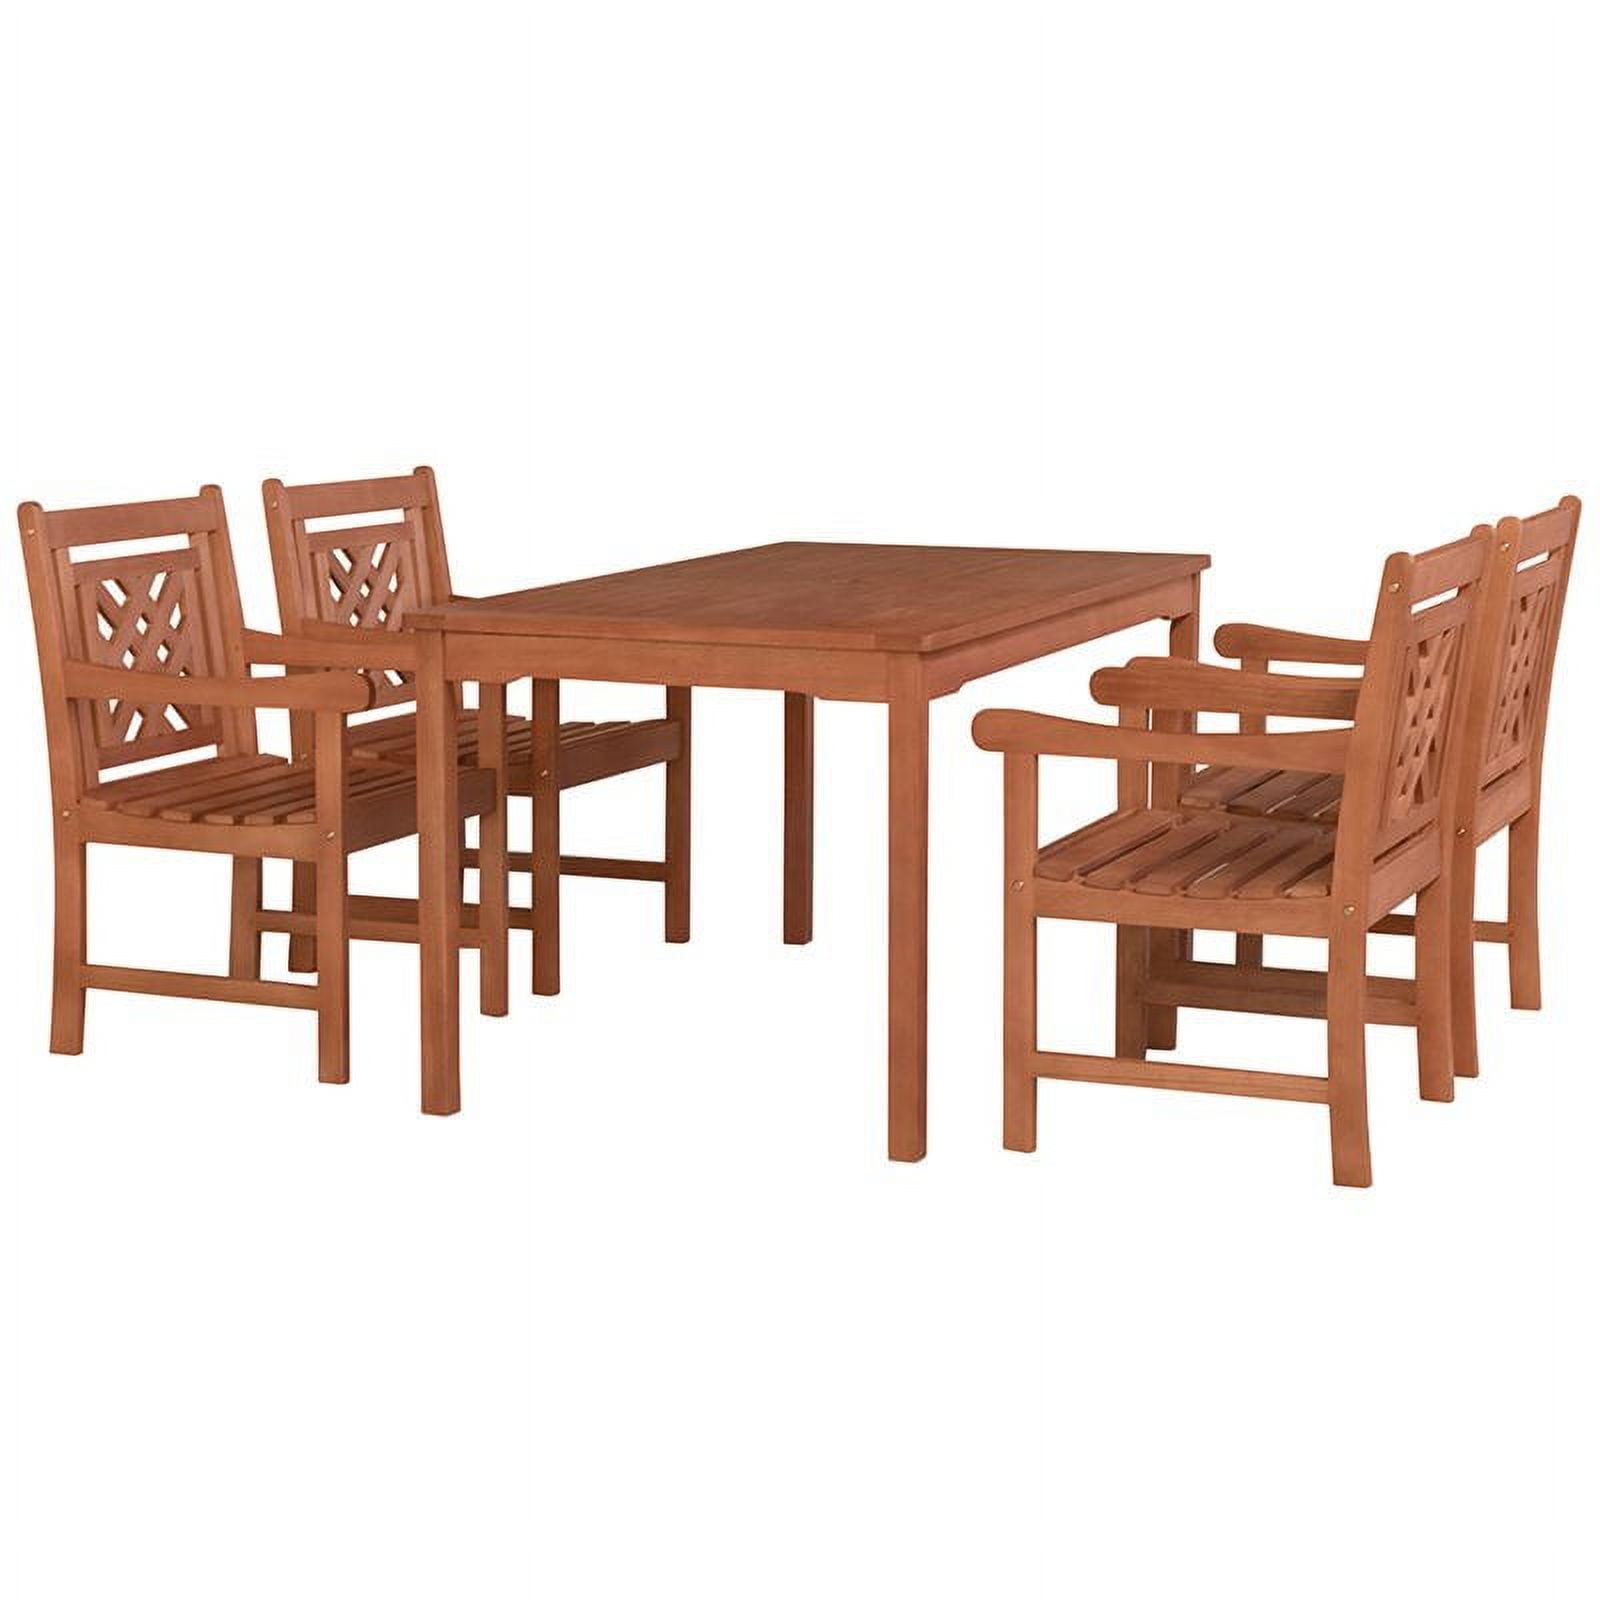 V98set71 Malibu Outdoor Wood Patio Rectangular Table Dining Set, Natural Wood - 34 X 22 X 24 In. - 5 Piece